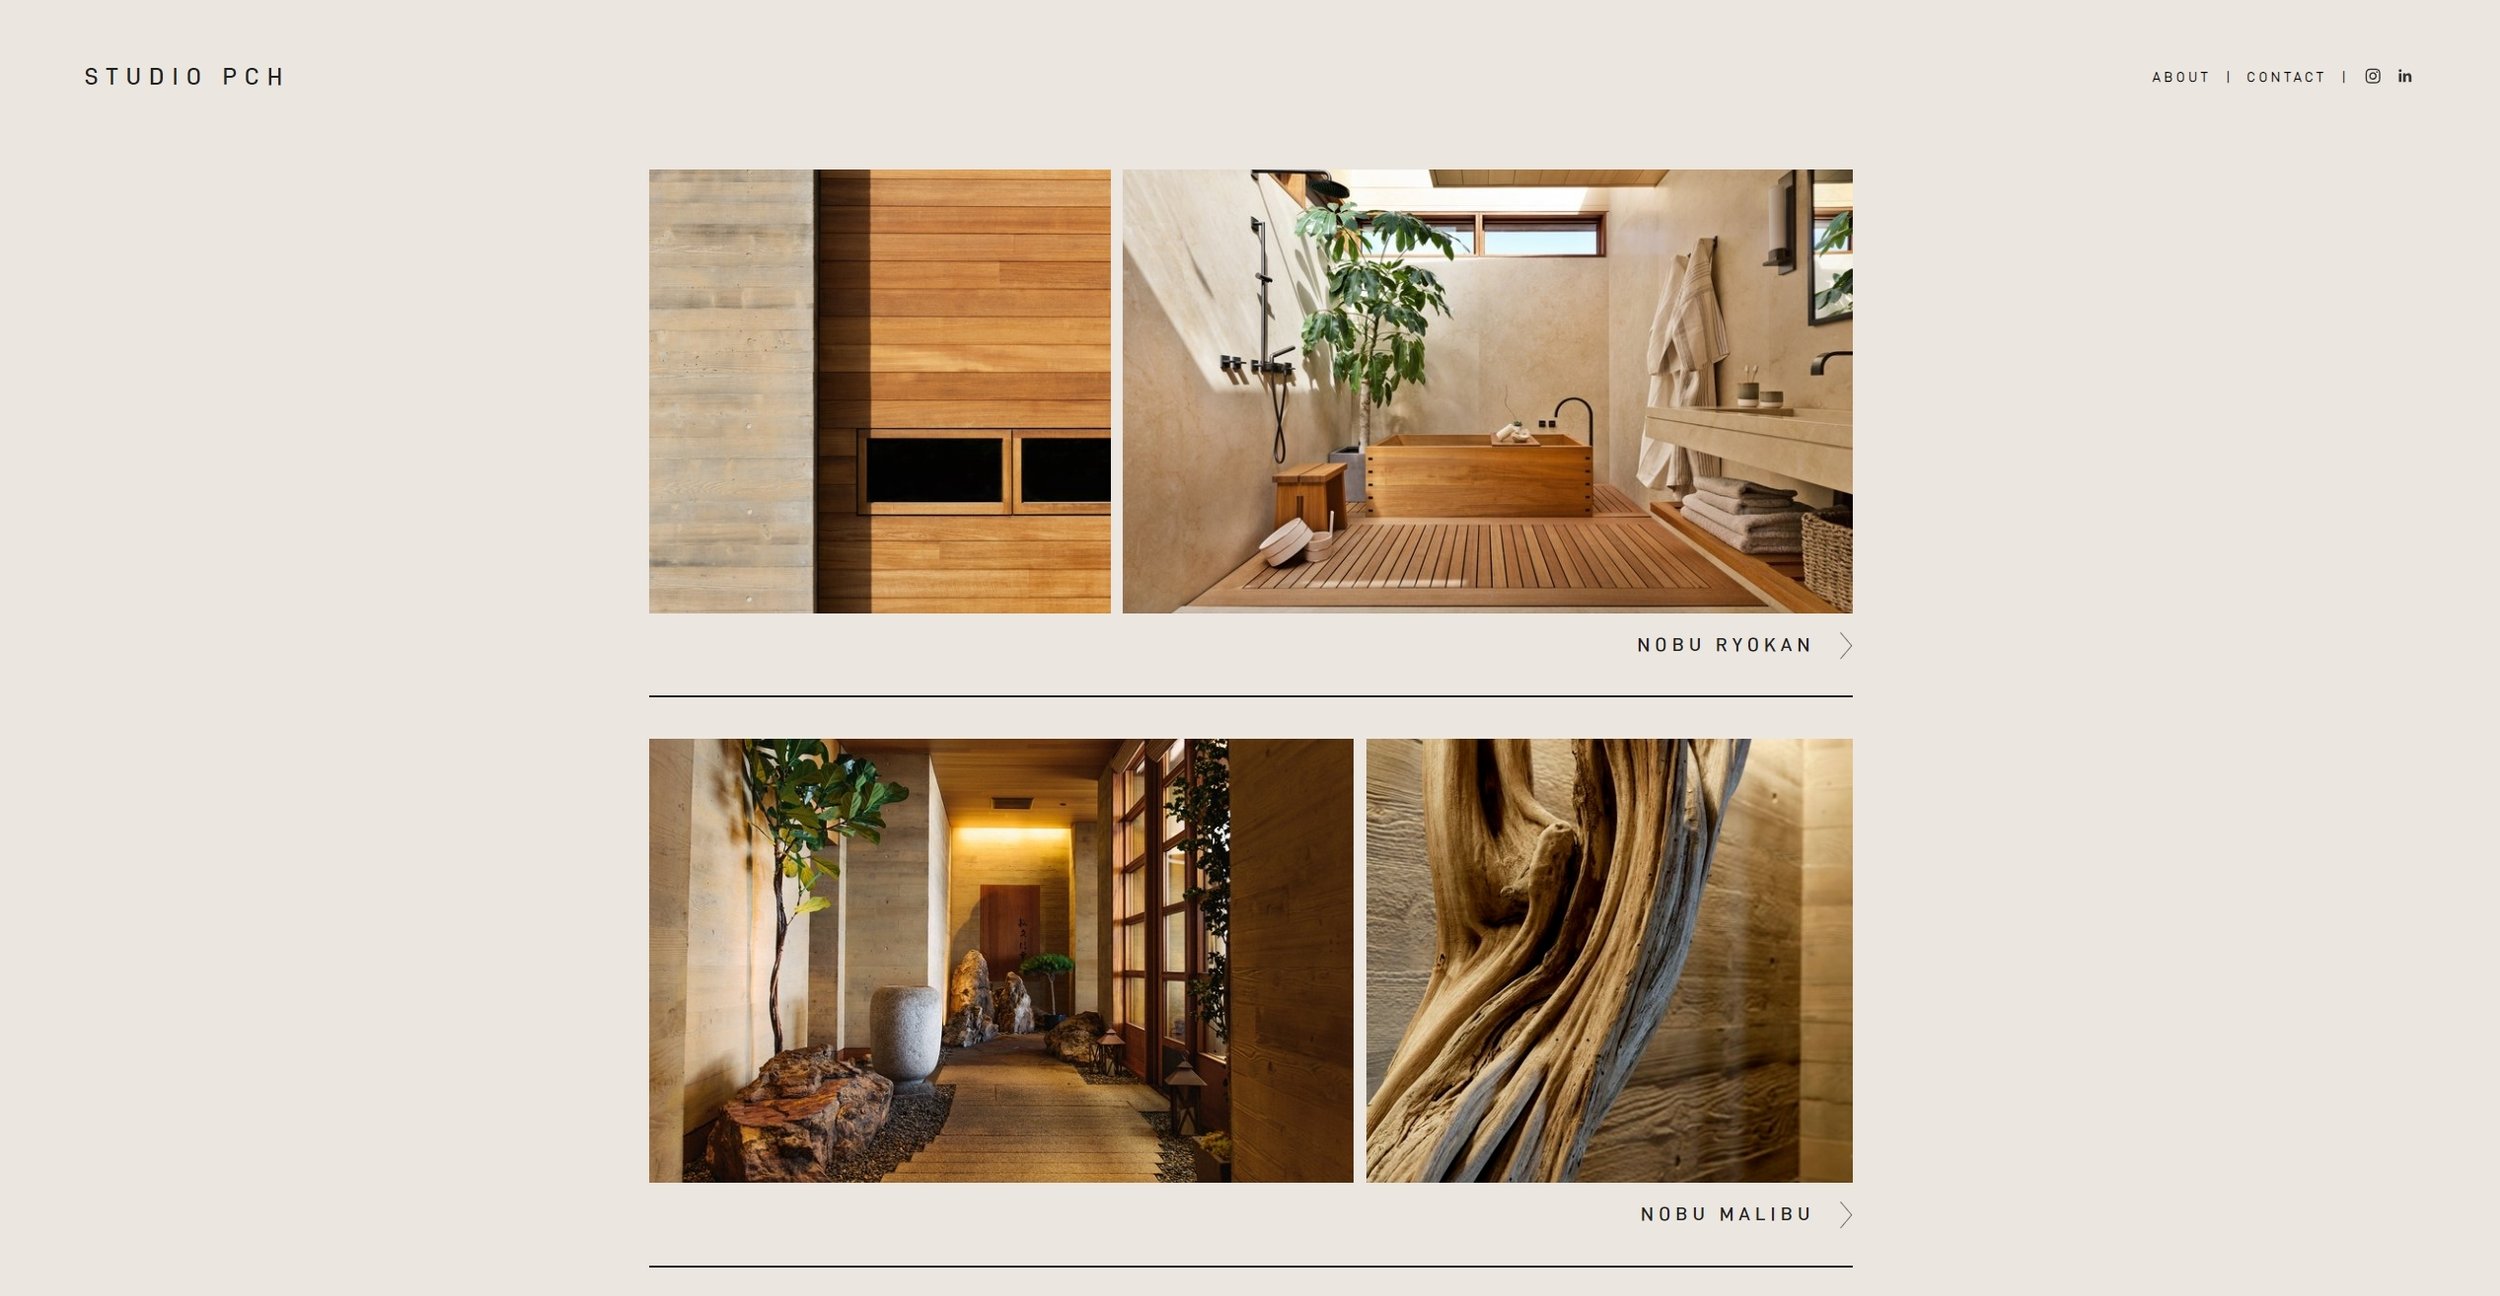 Gallery of Nobu Ryokan Hotel / Studio PCH, Montalba Architects and TAL  Studio - 5